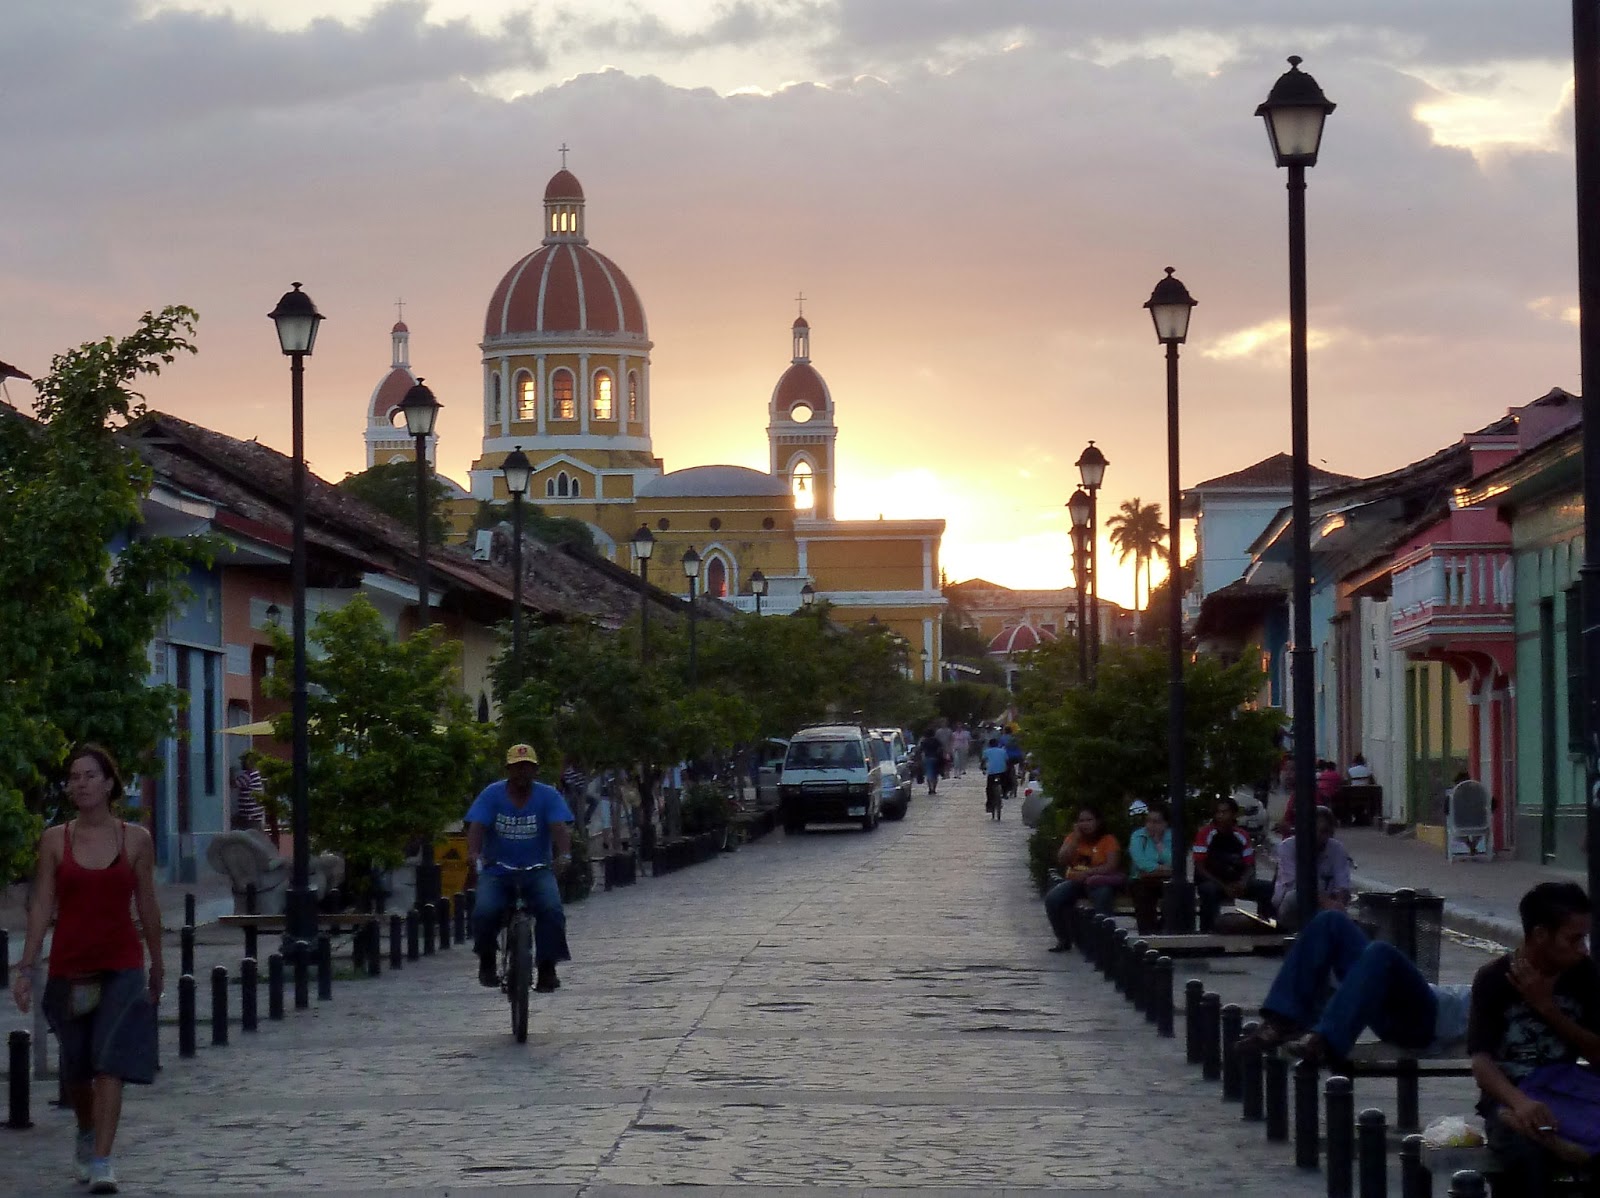 Nicaragua. A voyage to Nicaragua, Central America - Managua, León